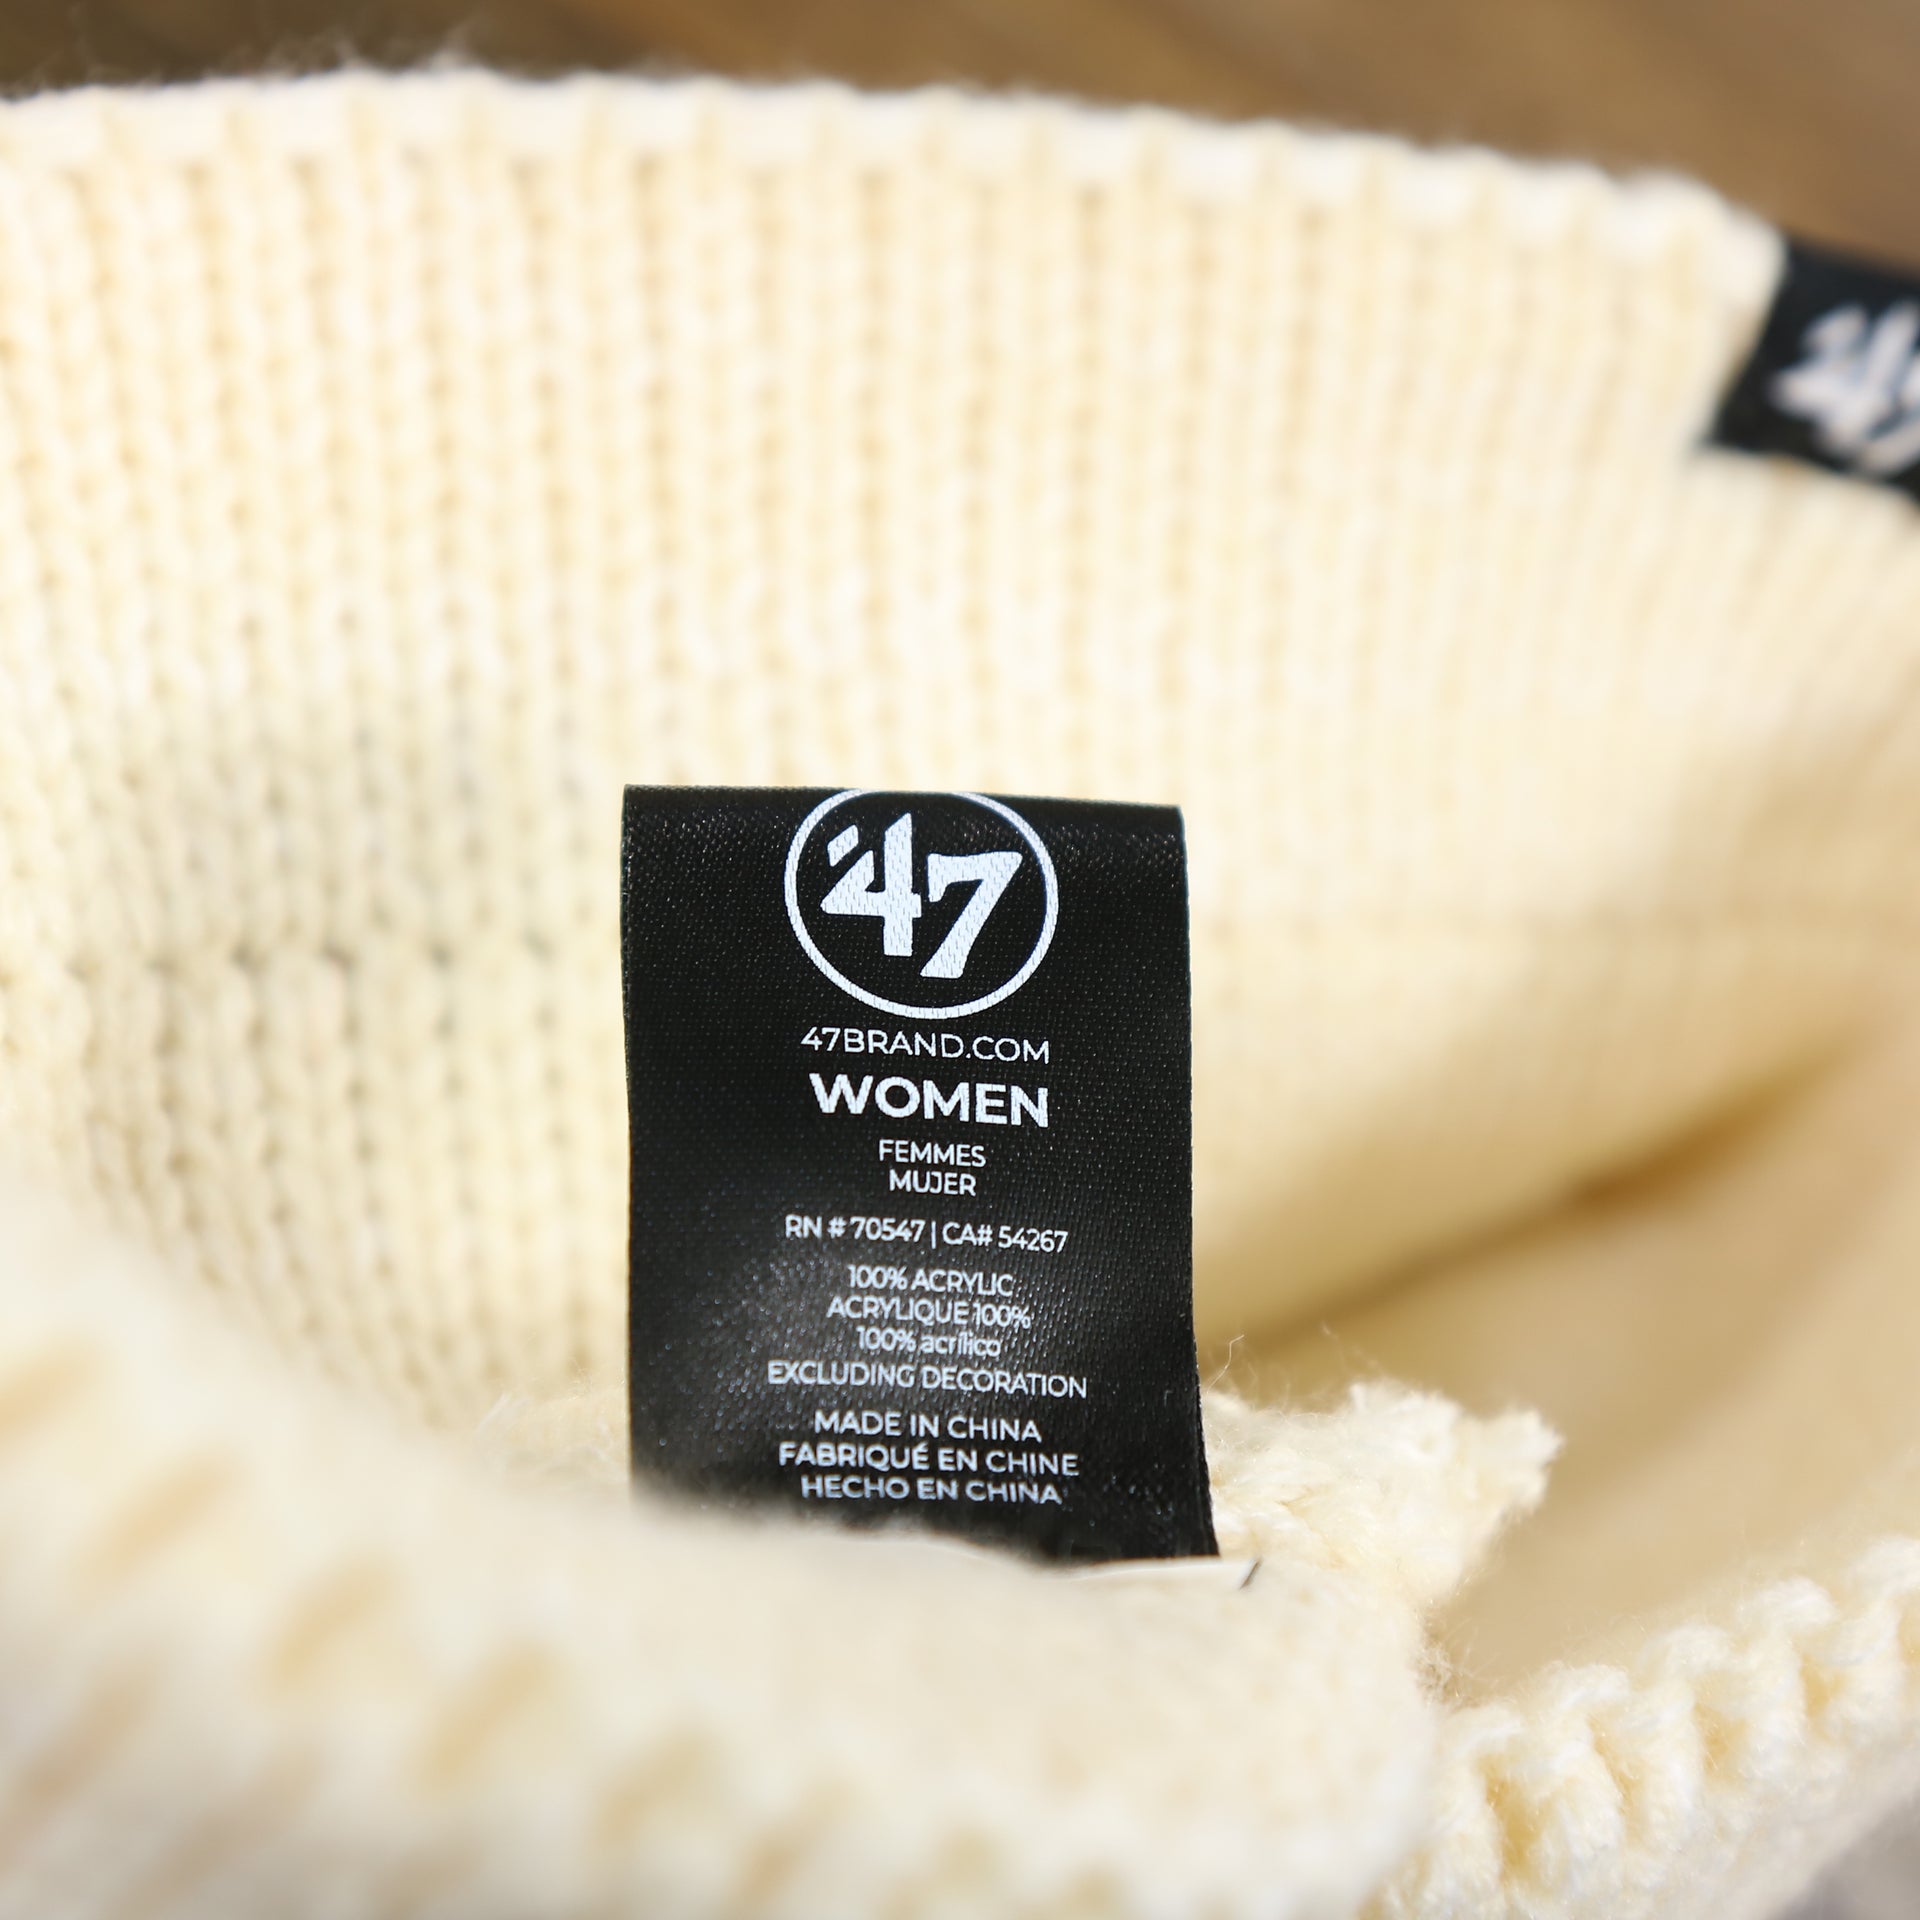 The 47 Brand Tag on the Women’s Philadelphia Eagles Winter Knit Cream Twisted Headband | White Twisted Headband